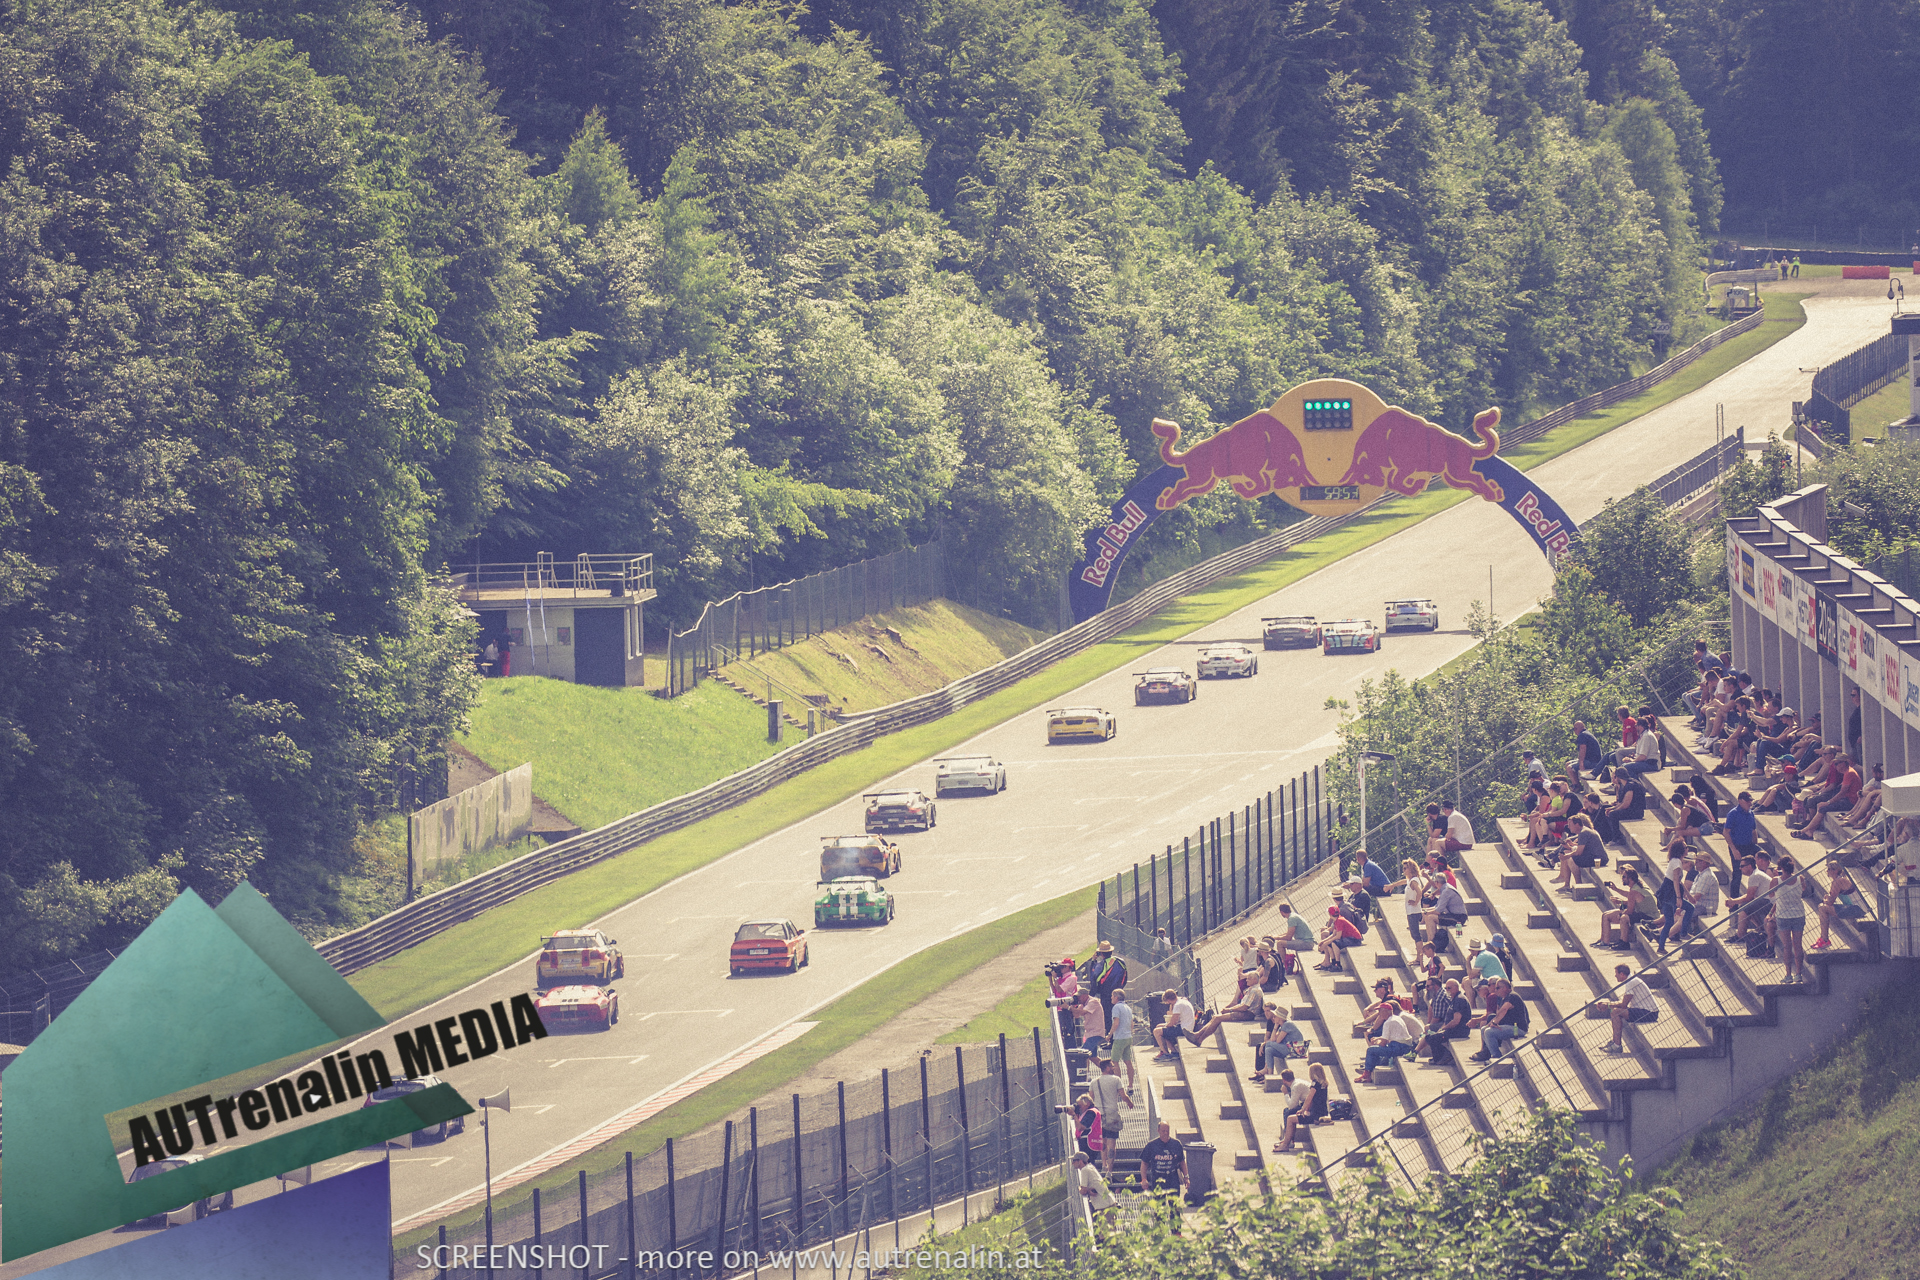 SportwagenCup_Salzburgring-Mai-2018_AUTrenalinMEDIA_web-6567.jpg